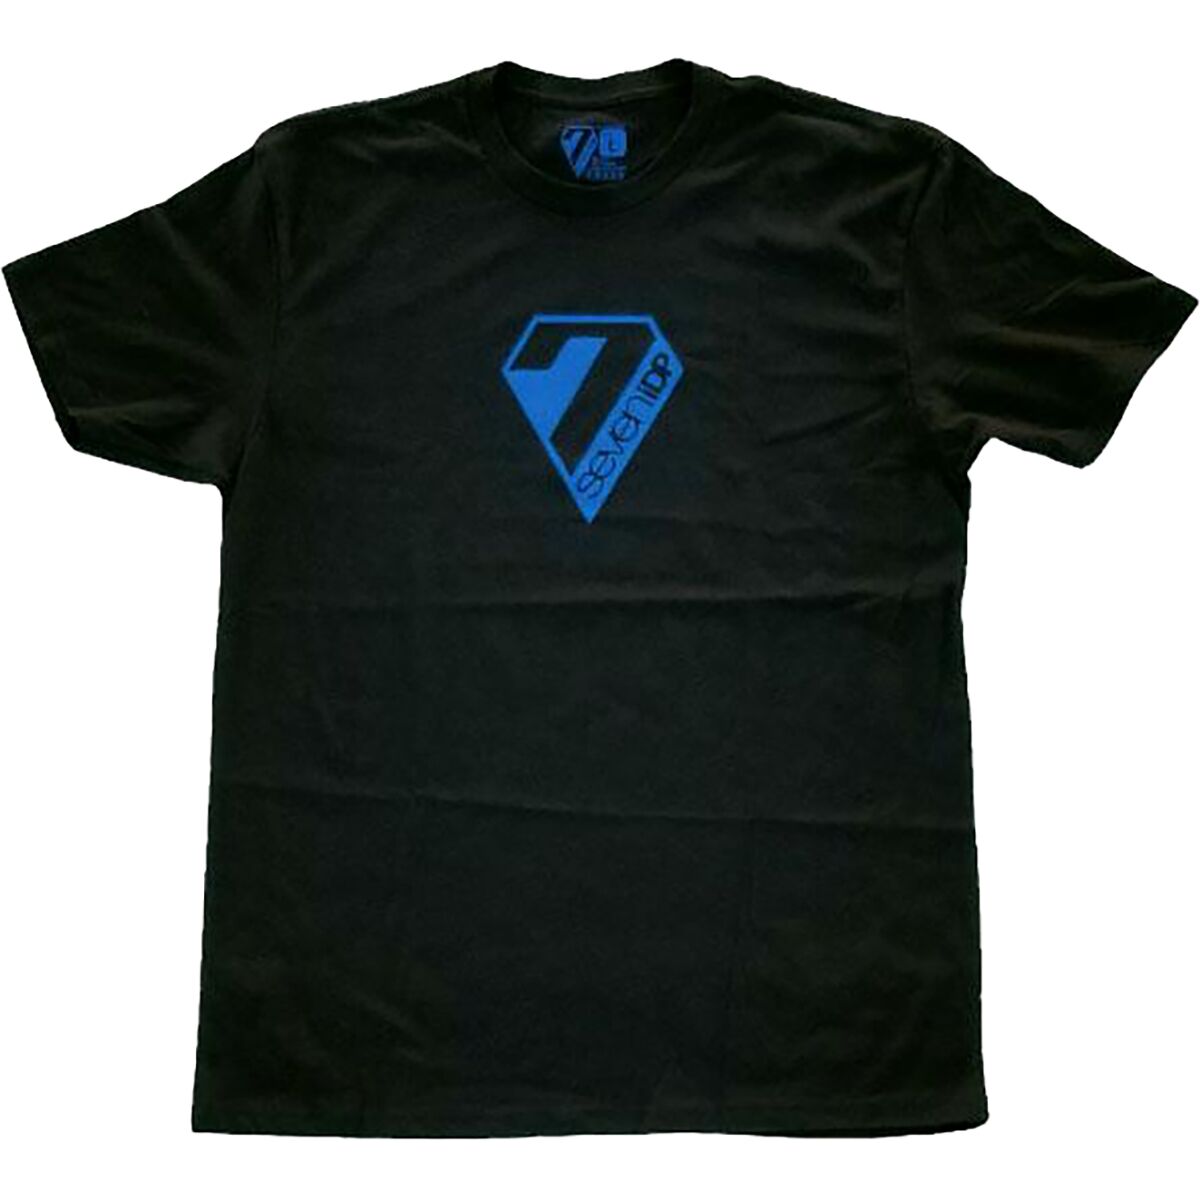 7 Protection 7iDP Logo T-Shirt - Men's Black, M